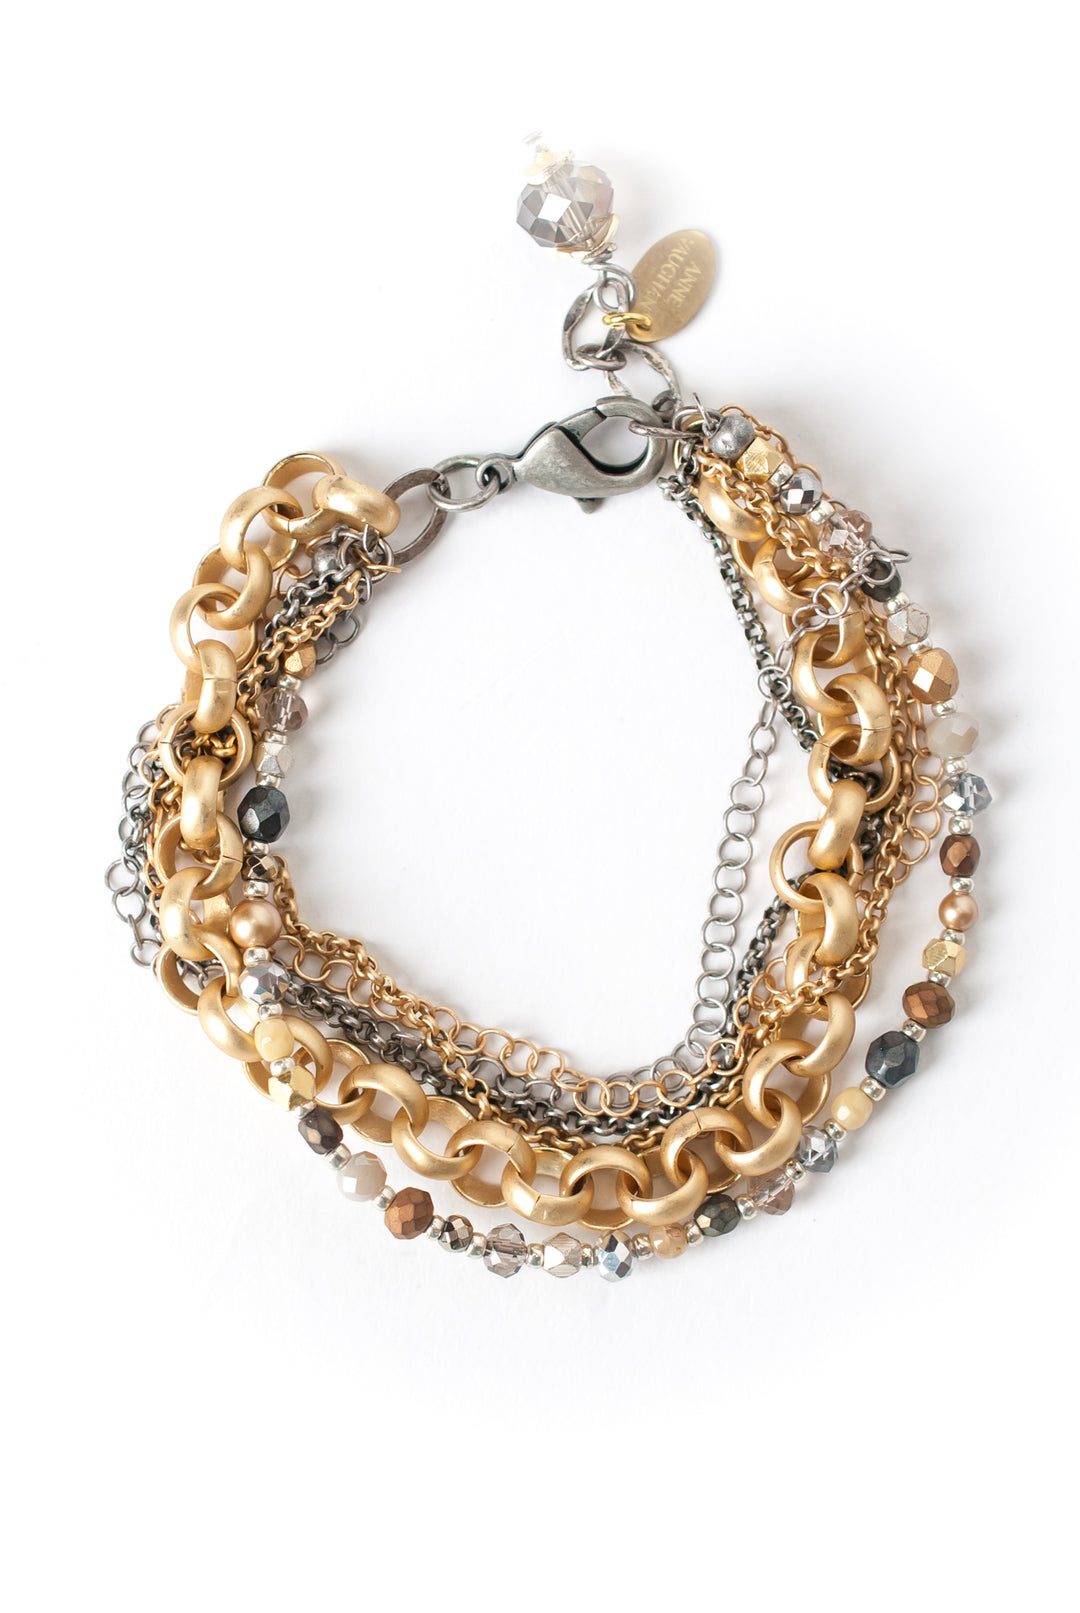 Silver & Gold 7.5-8.5" Multistrand Bracelet